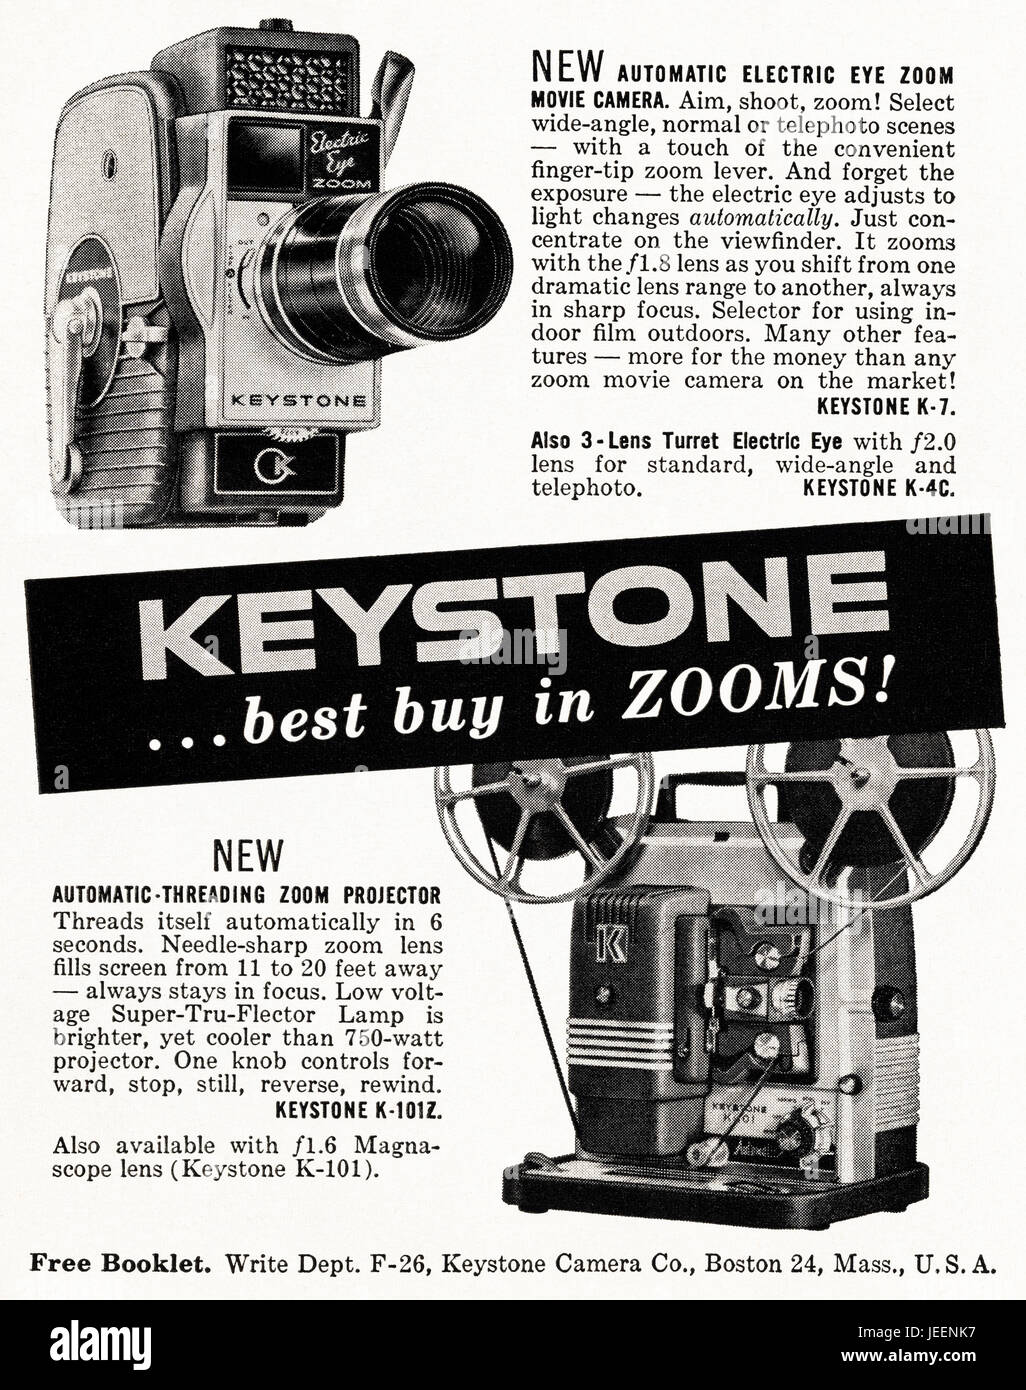 1960s-advertisement-advertising-keystone-home-movie-camera-of-boston-JEENK7.jpg